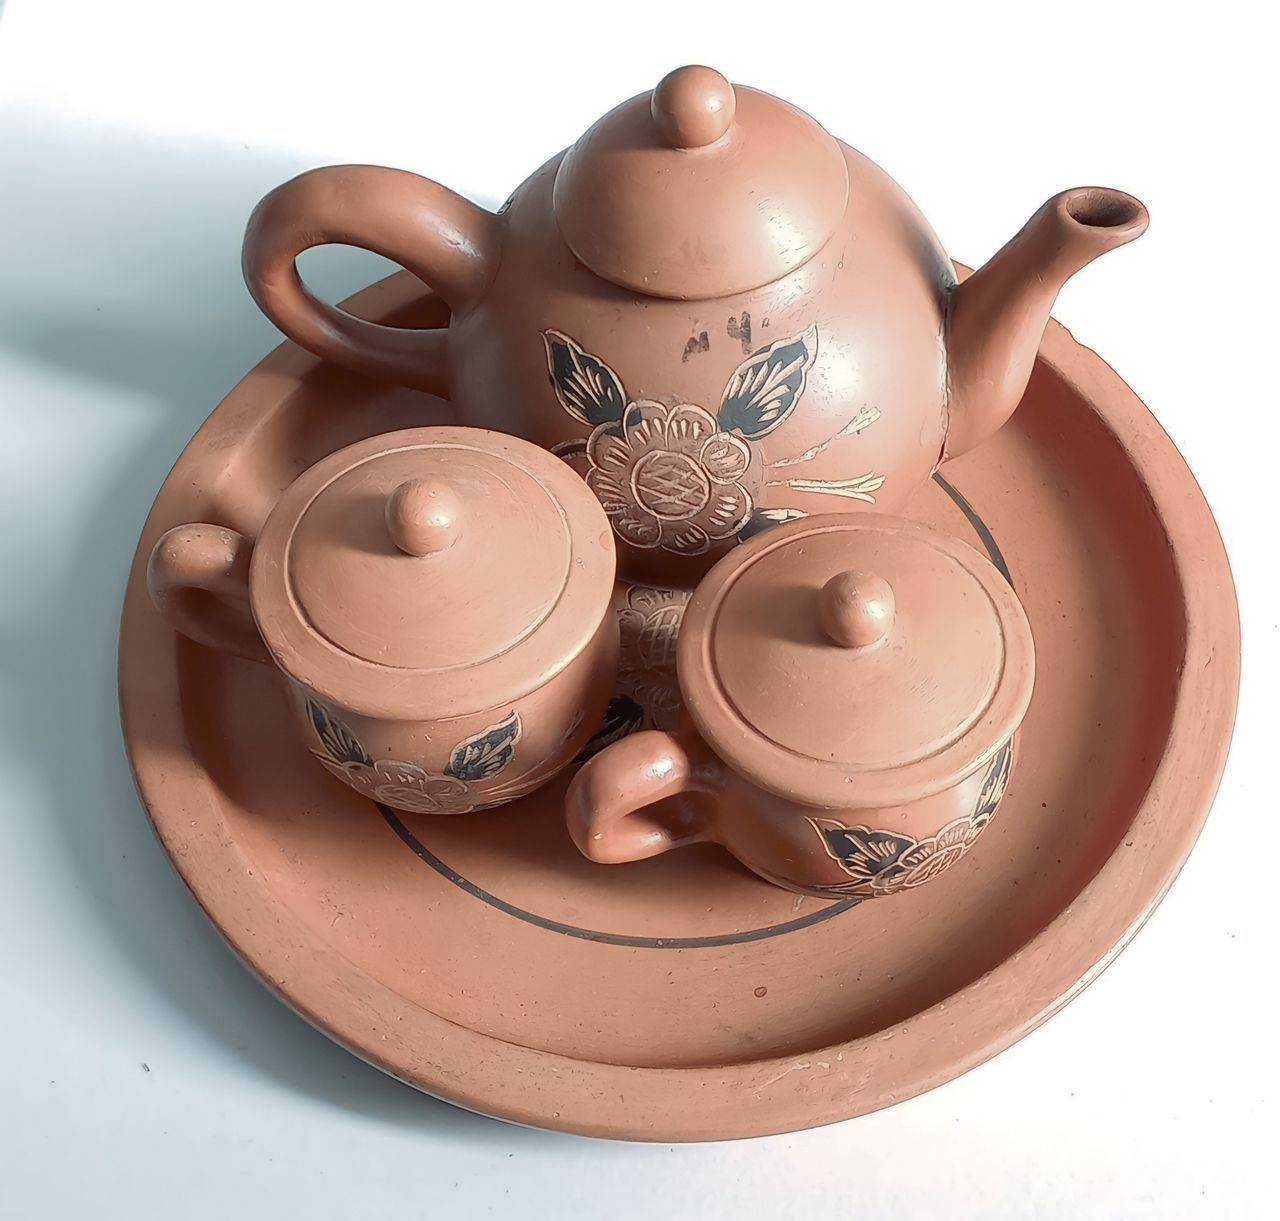 teapot, ceramic, cup, porcelain, food and drink, drink, pottery, tea, crockery, hot drink, no people, mug, craft, tea cup, still life, tea kettle, indoors, coffee cup